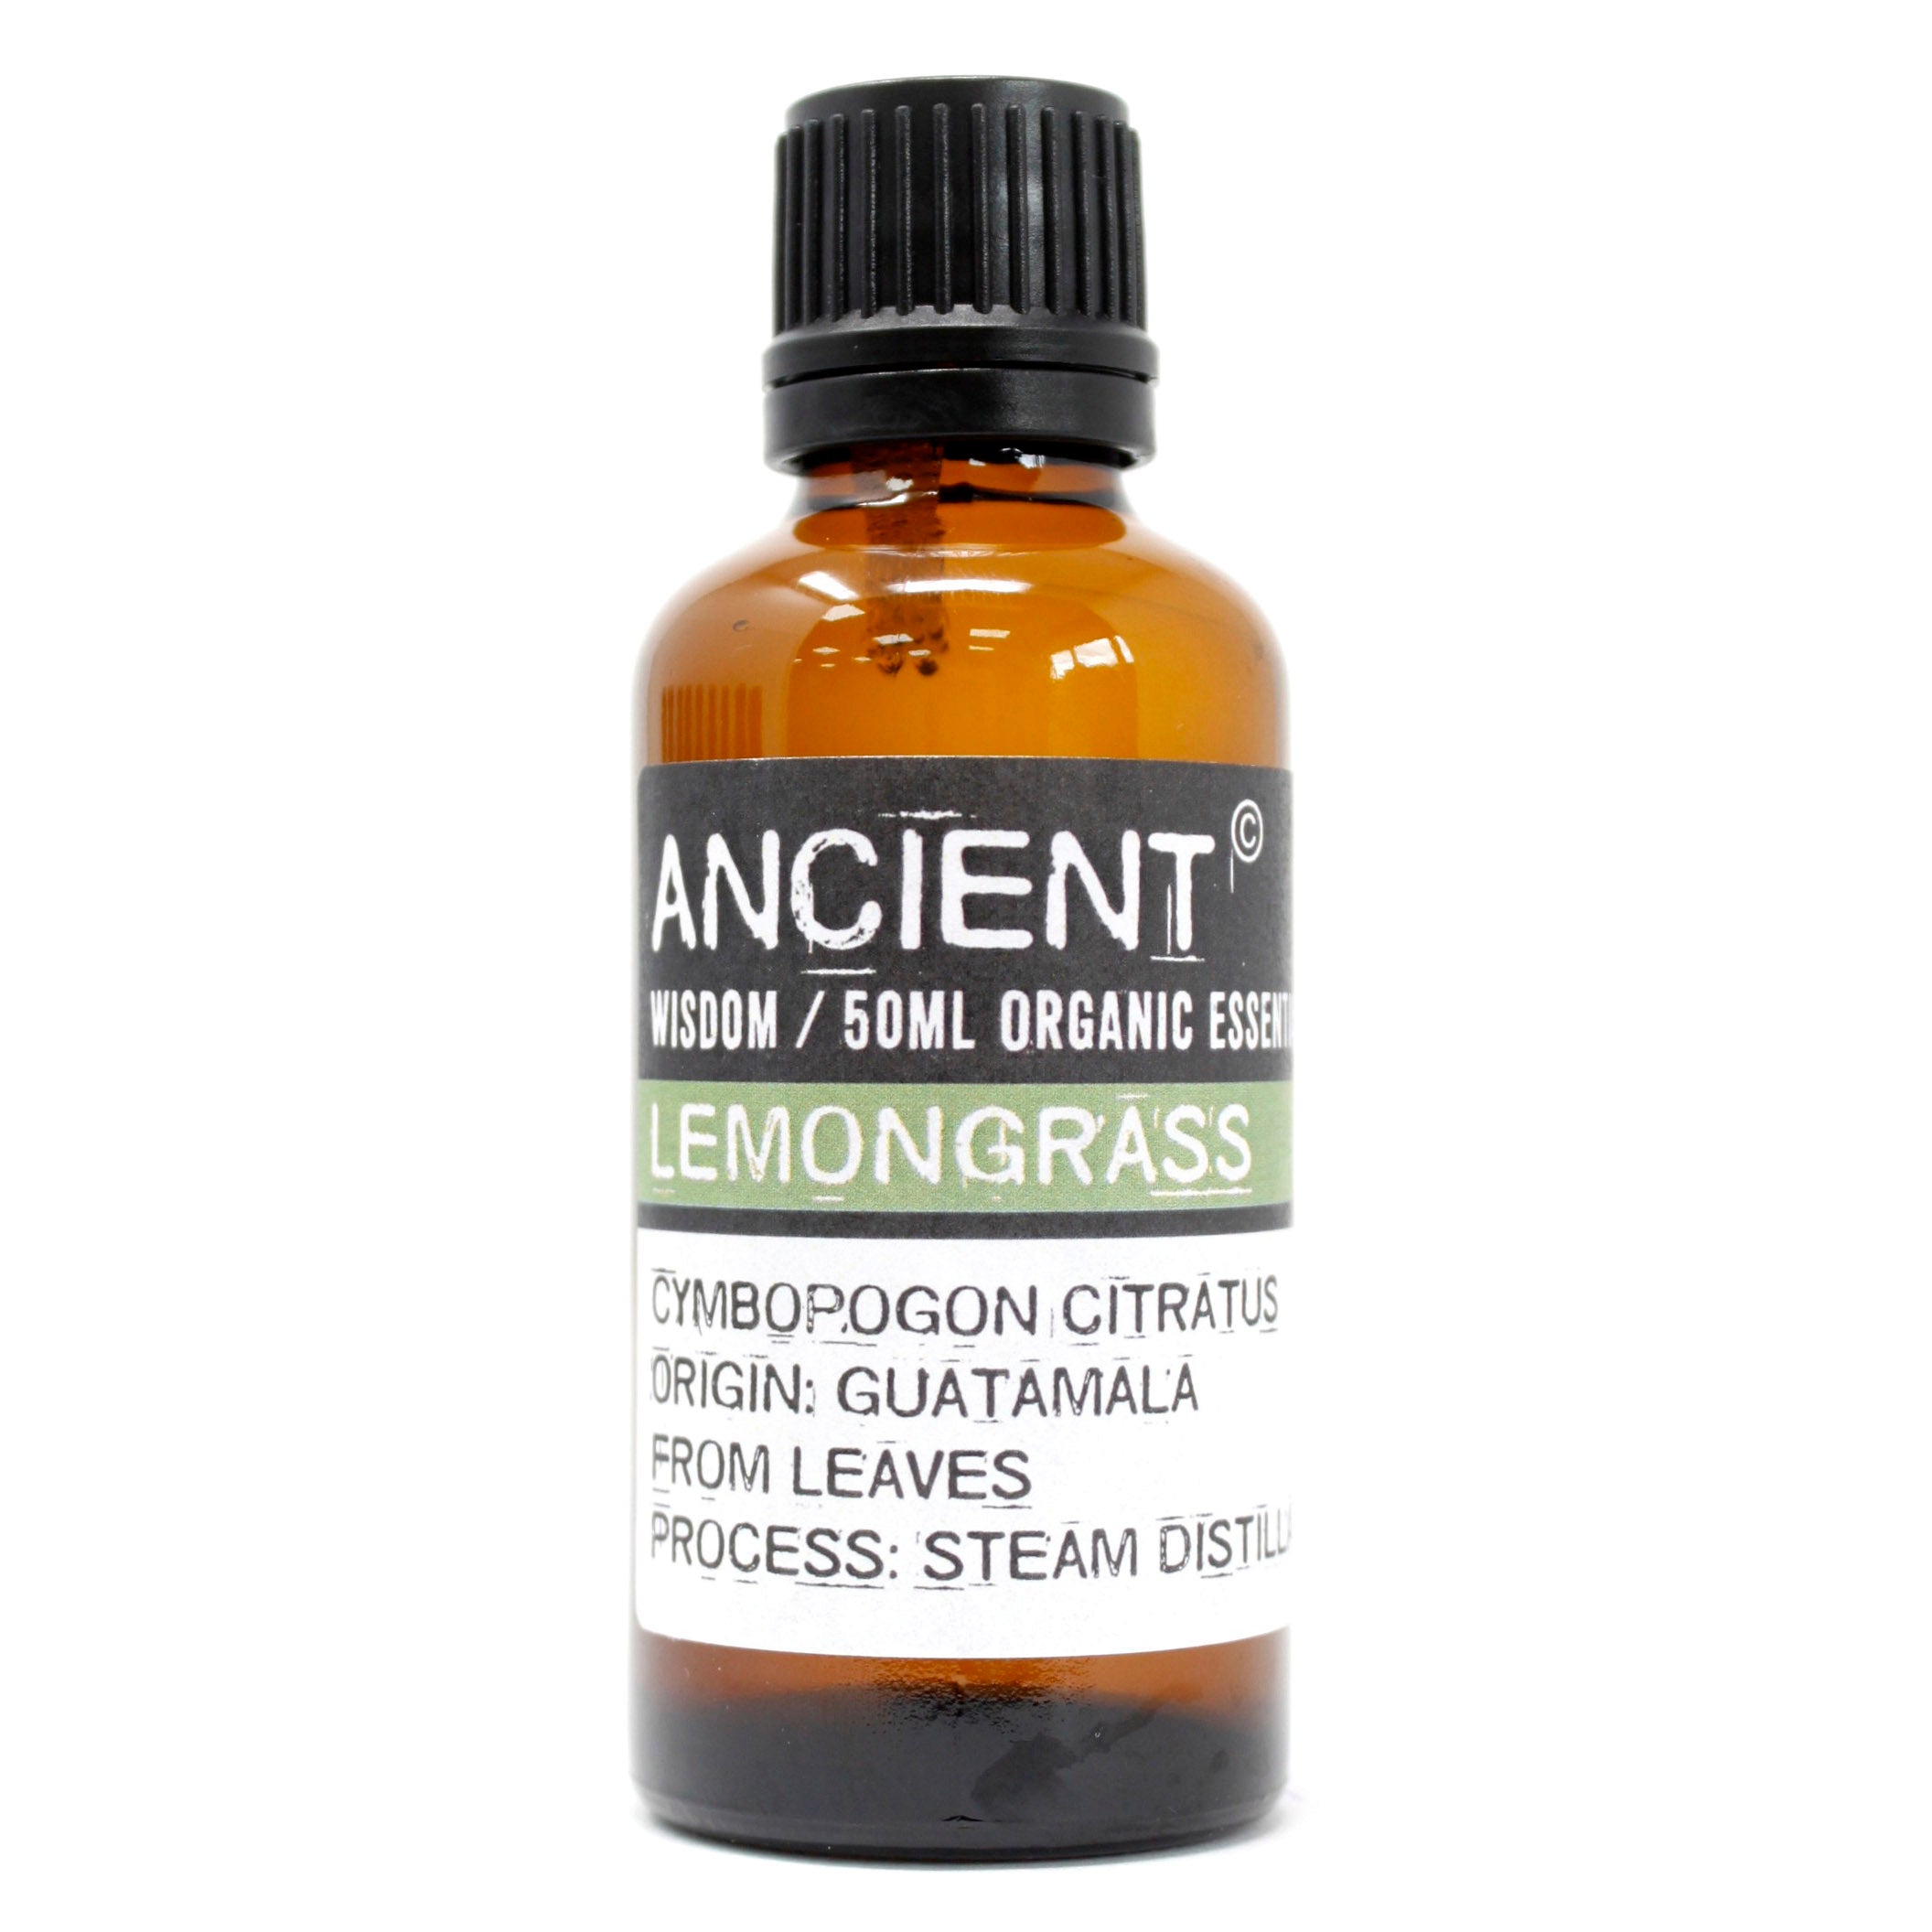 View Lemongrass Organic Essential Oil 50ml information